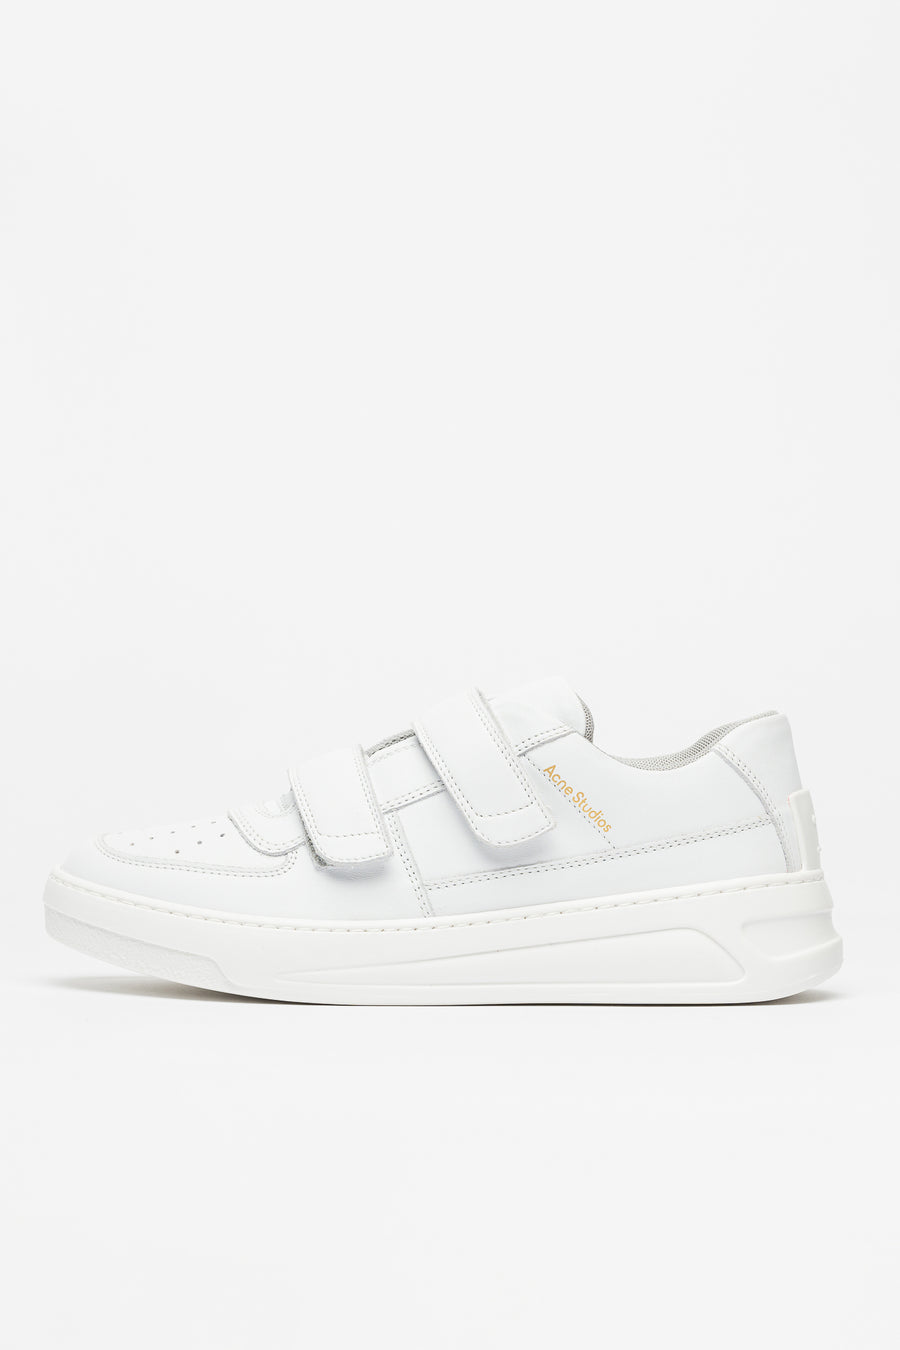 velcro strap white sneakers